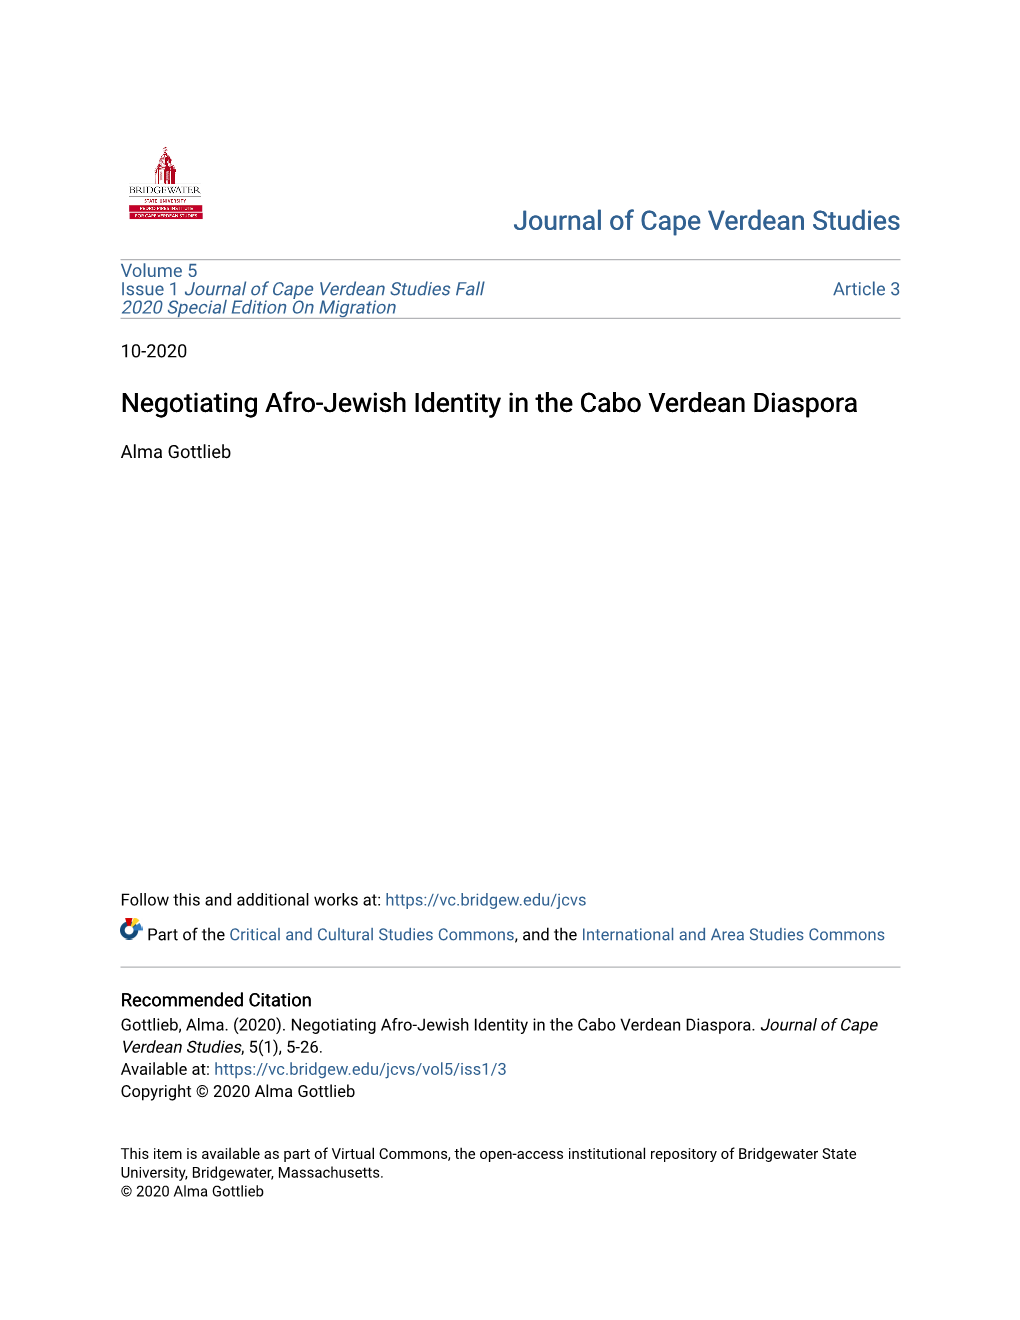 Negotiating Afro-Jewish Identity in the Cabo Verdean Diaspora